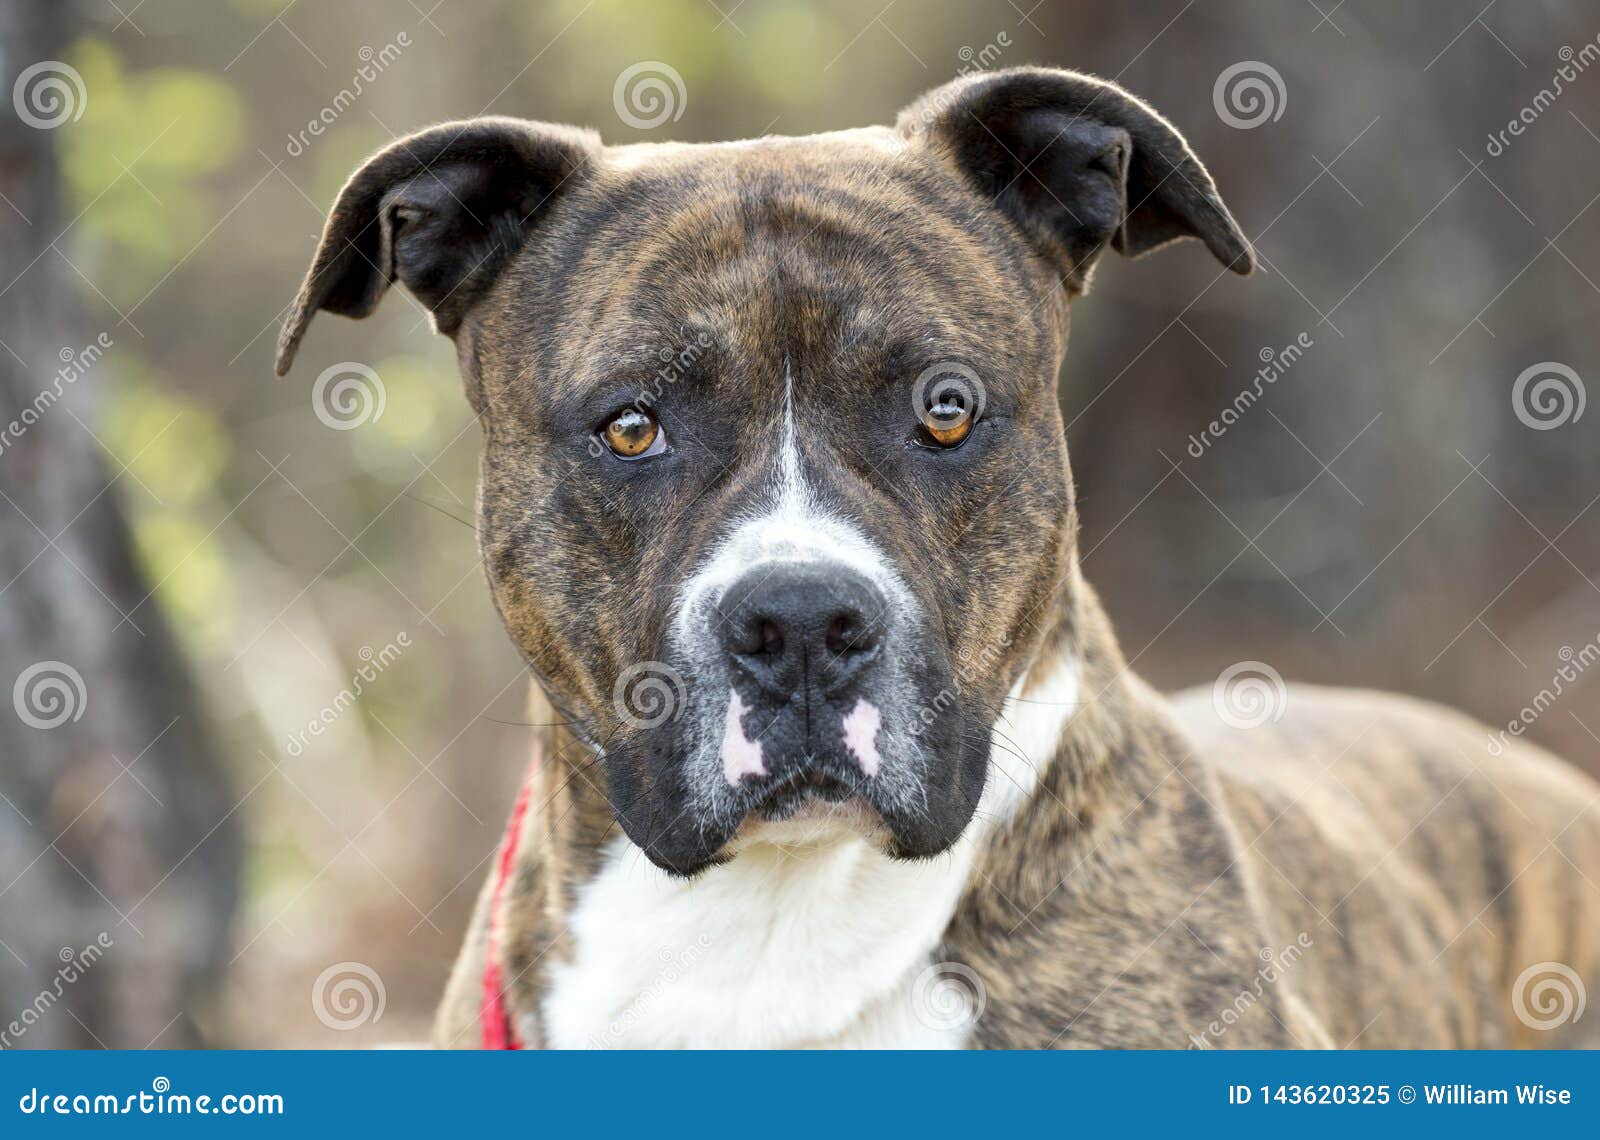 Mastiff and American Bulldog Mix Breed Dog Stock Image - Image of american, county: 143620325